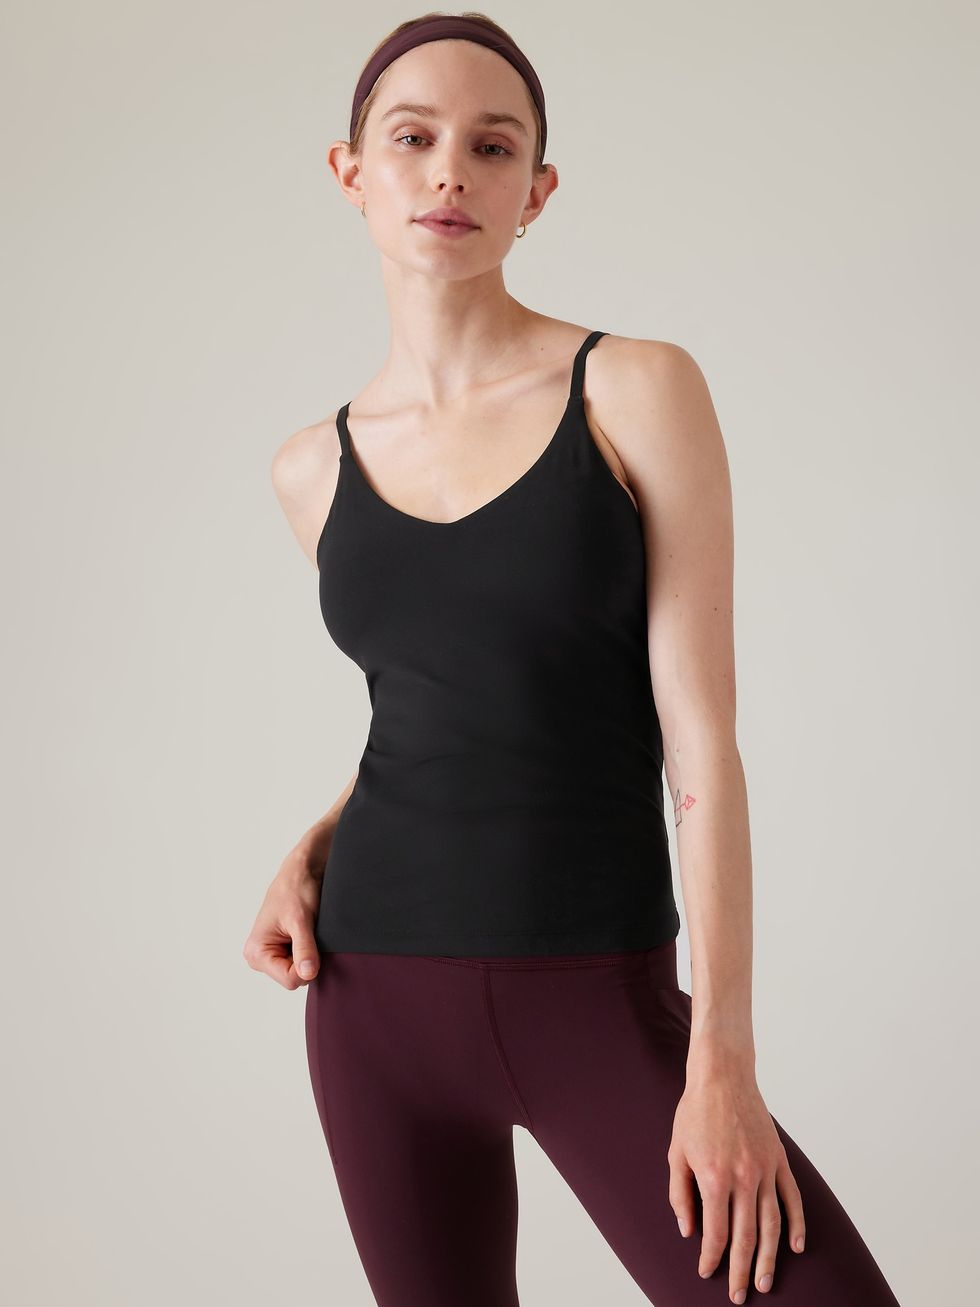 Loose Fit Sleeveless Crop Top Running Workout Women Yoga Tank Tops